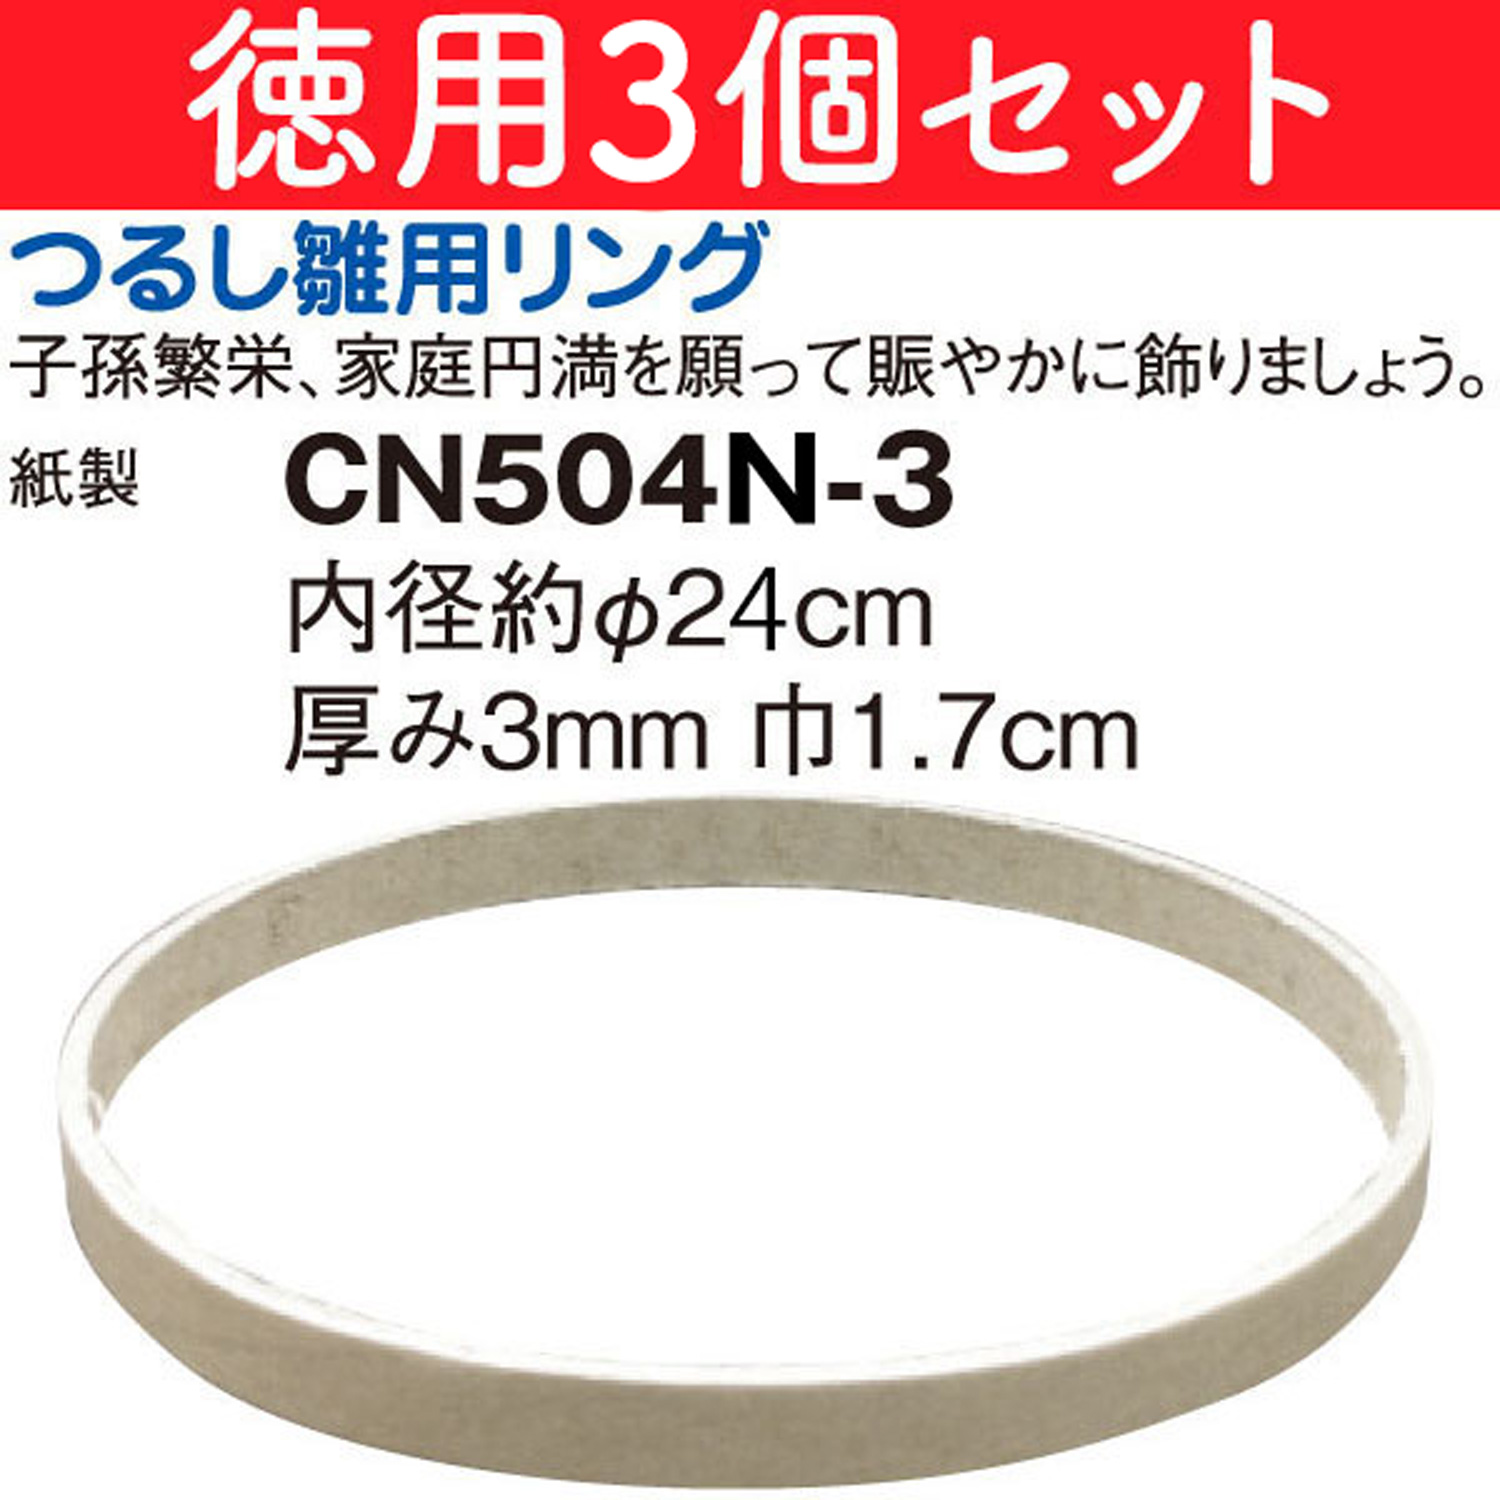 CN504N-3 特)徳用つるし雛用リング 3個 (袋)